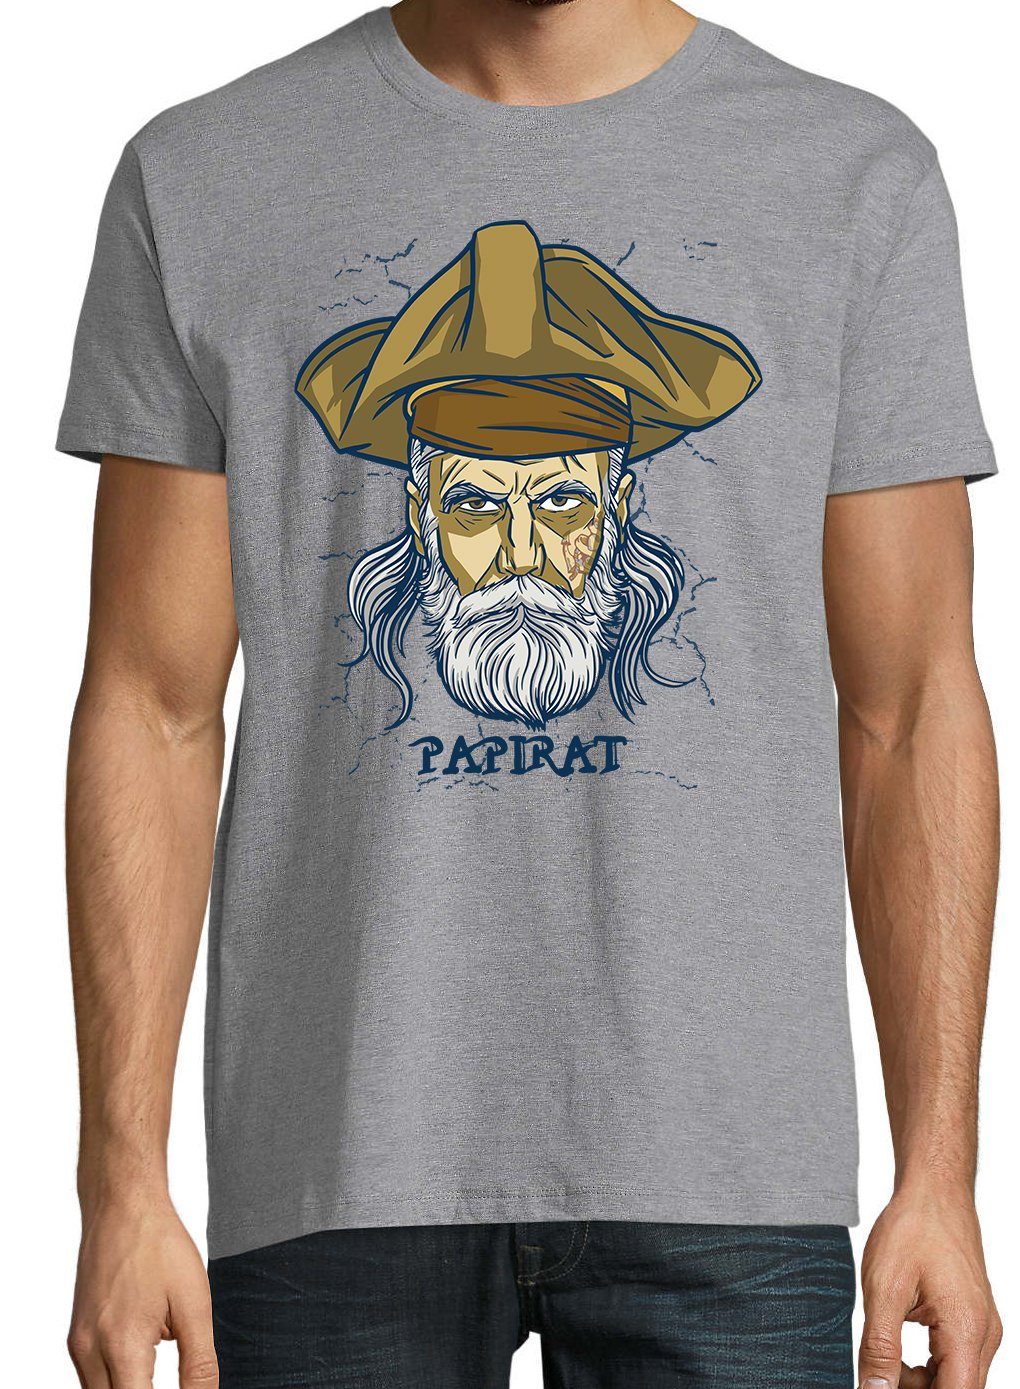 Youth Designz T-Shirt Piraten Papa trendigem Herren Grau mit Frontprint Shirt Papirat